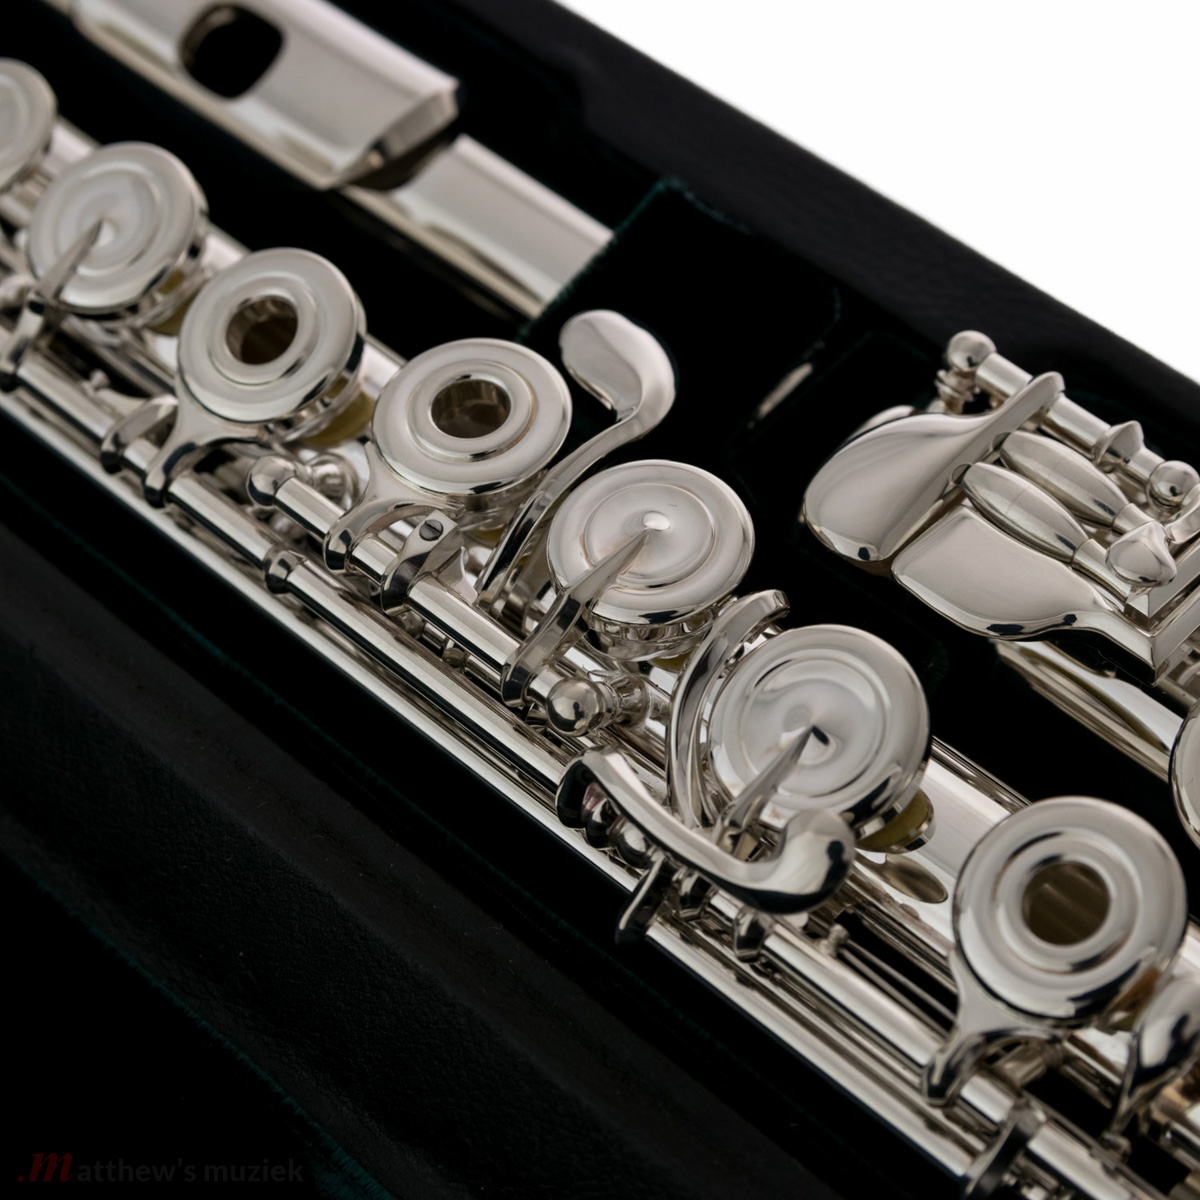 Azumi Flute - AZ Z2 RBE